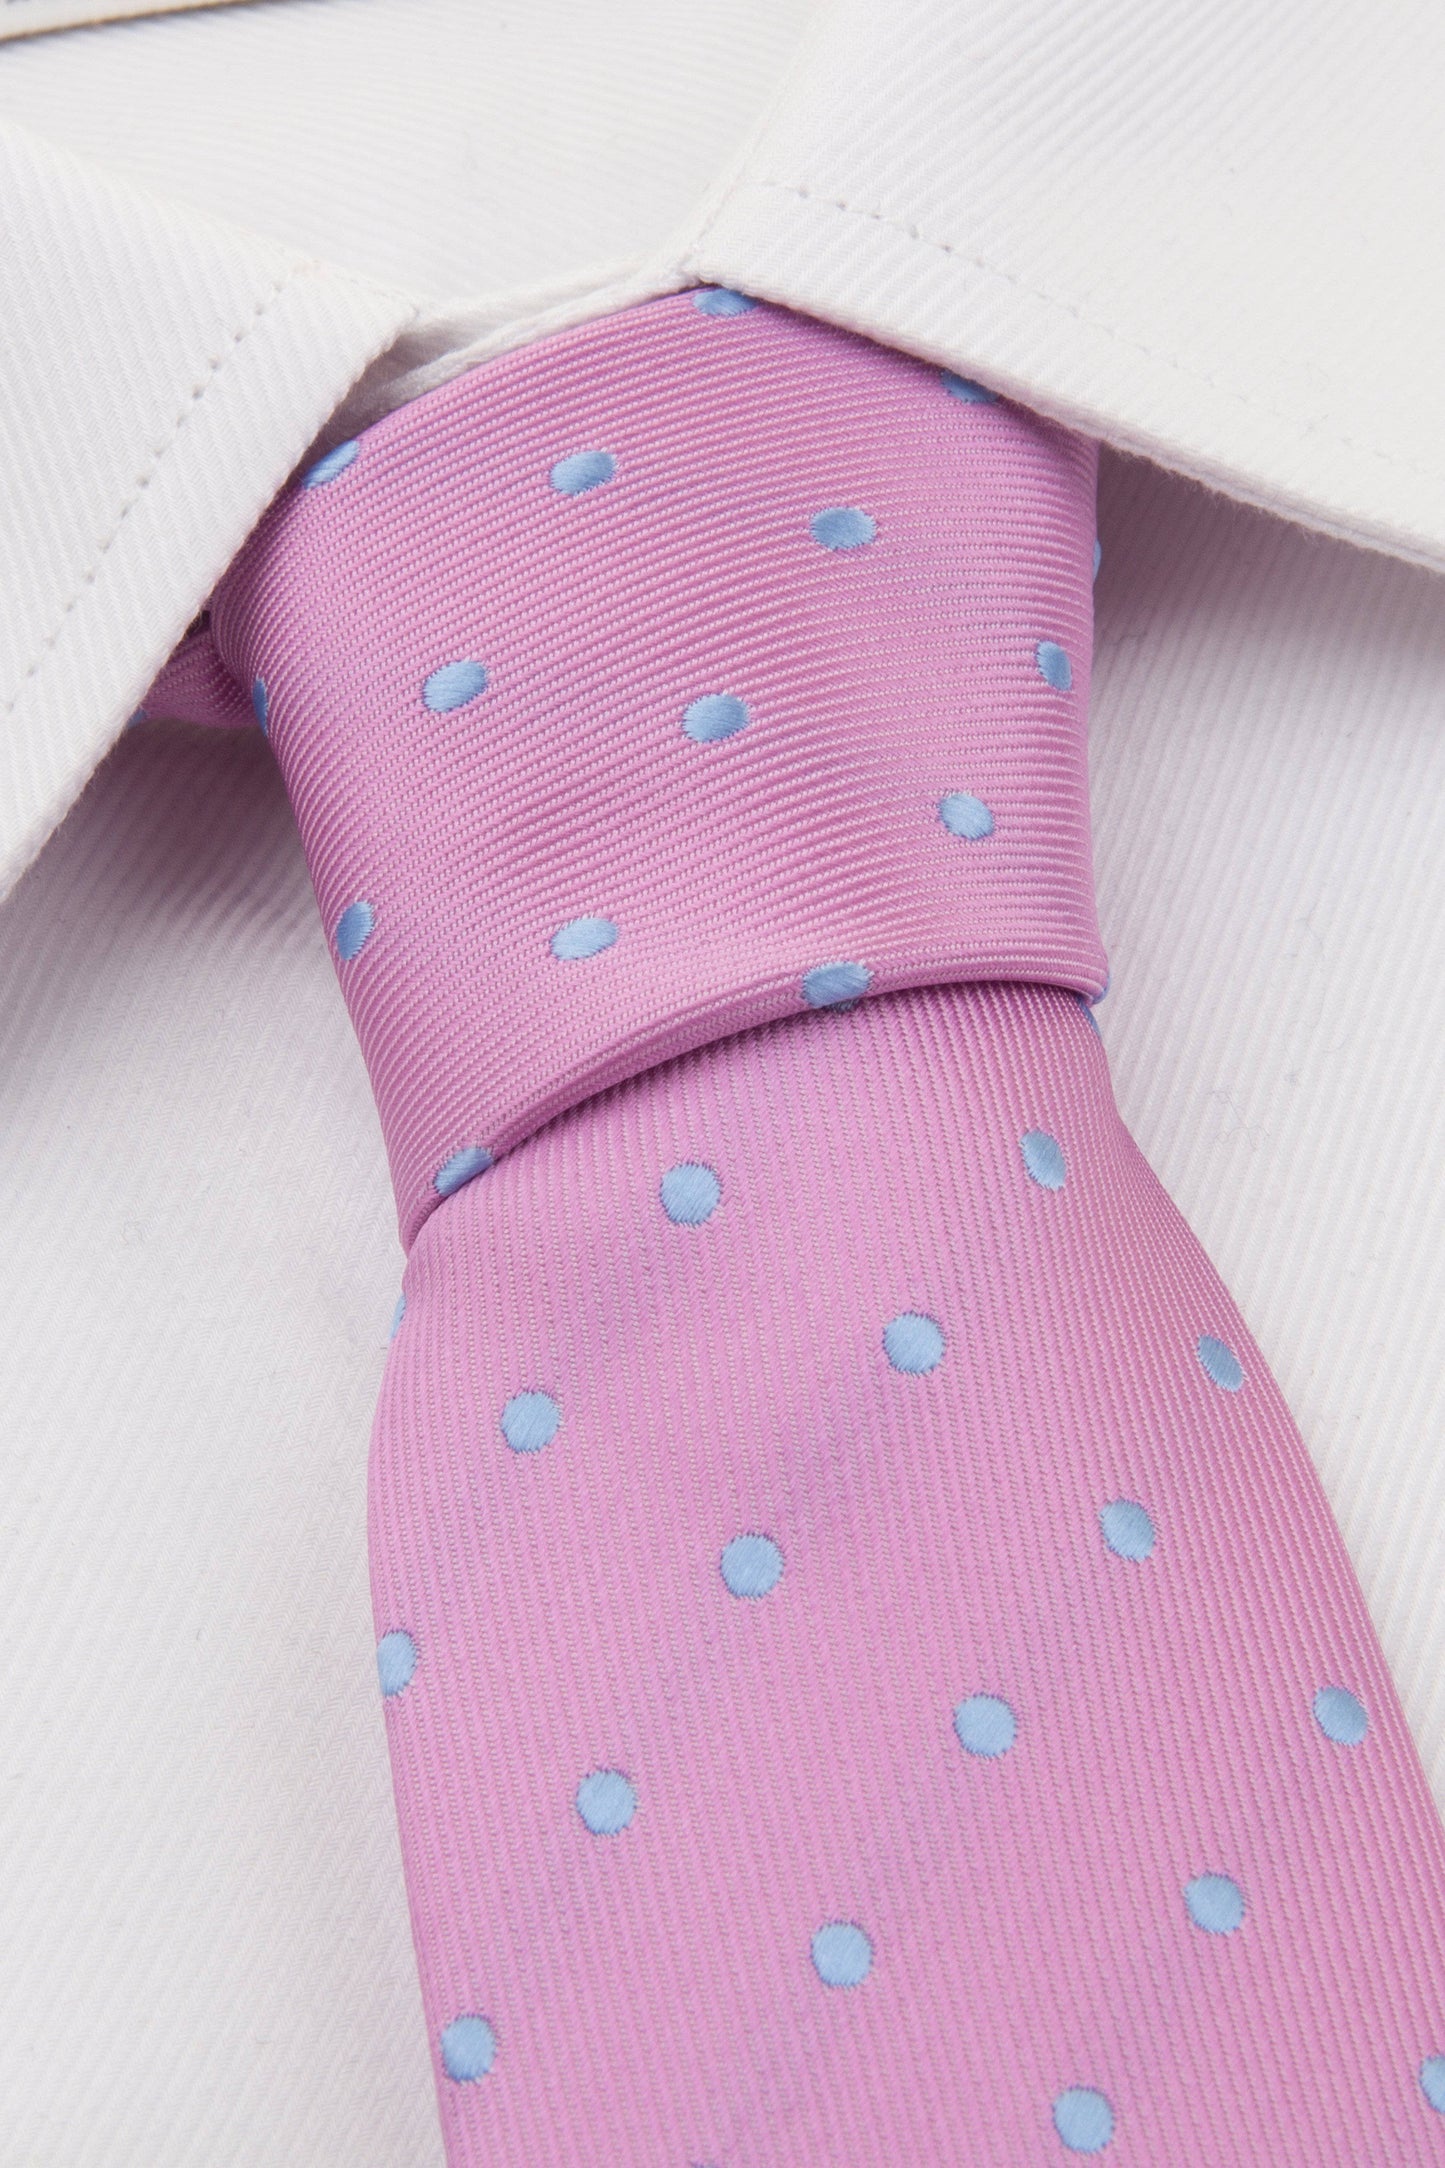 Close up of Pink Blue Spot Tie on a shirt